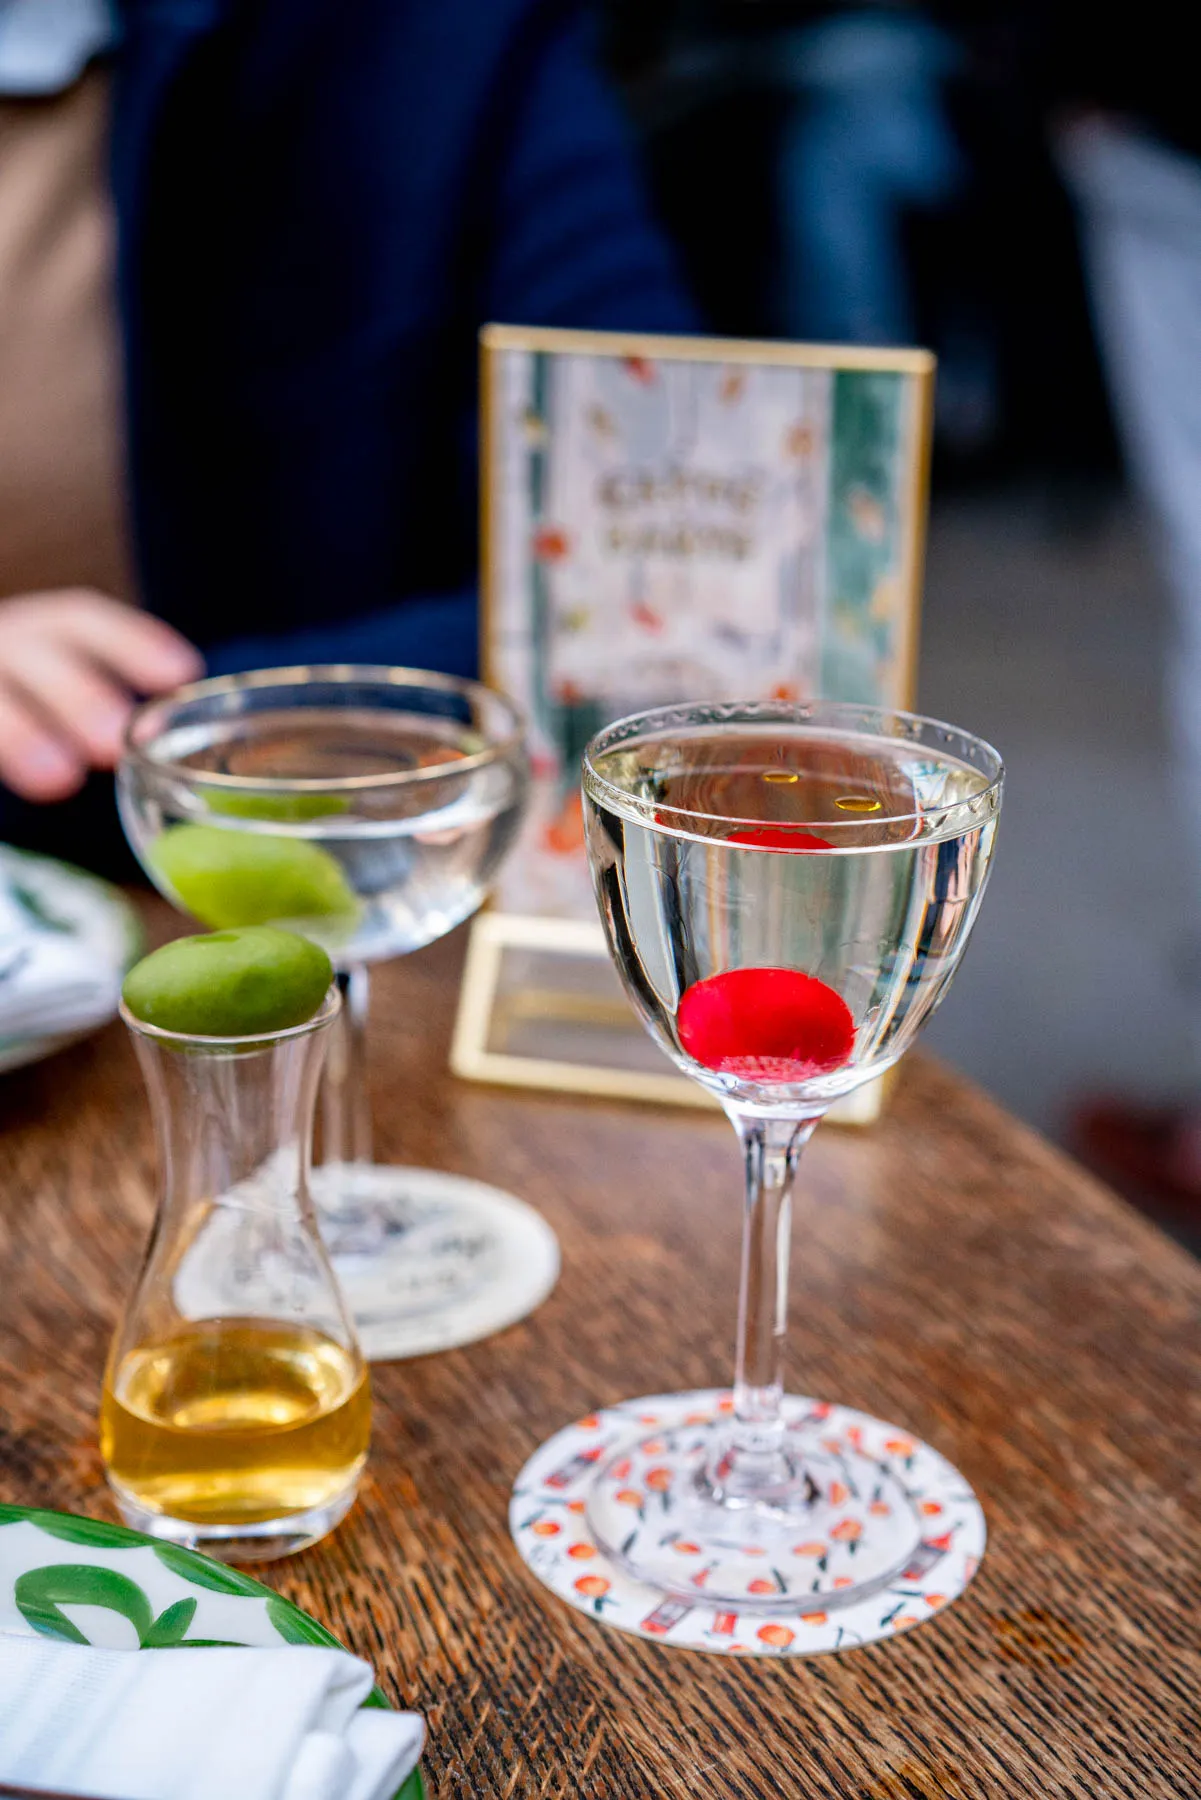 Dante martini, Best Martinis in New York City
